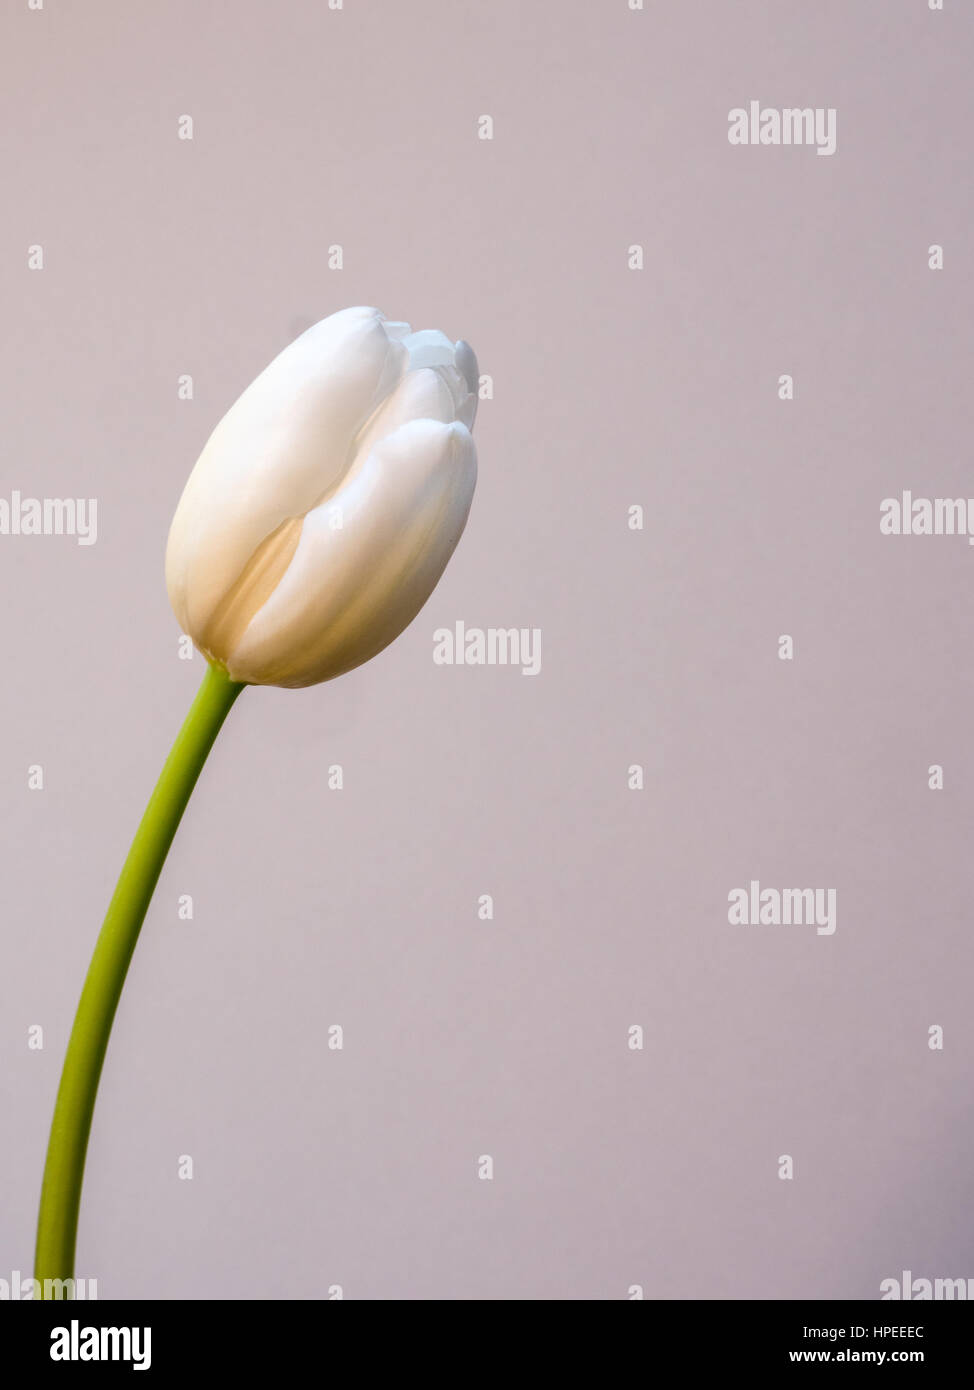 white tulip flower, portrait orientation Stock Photo